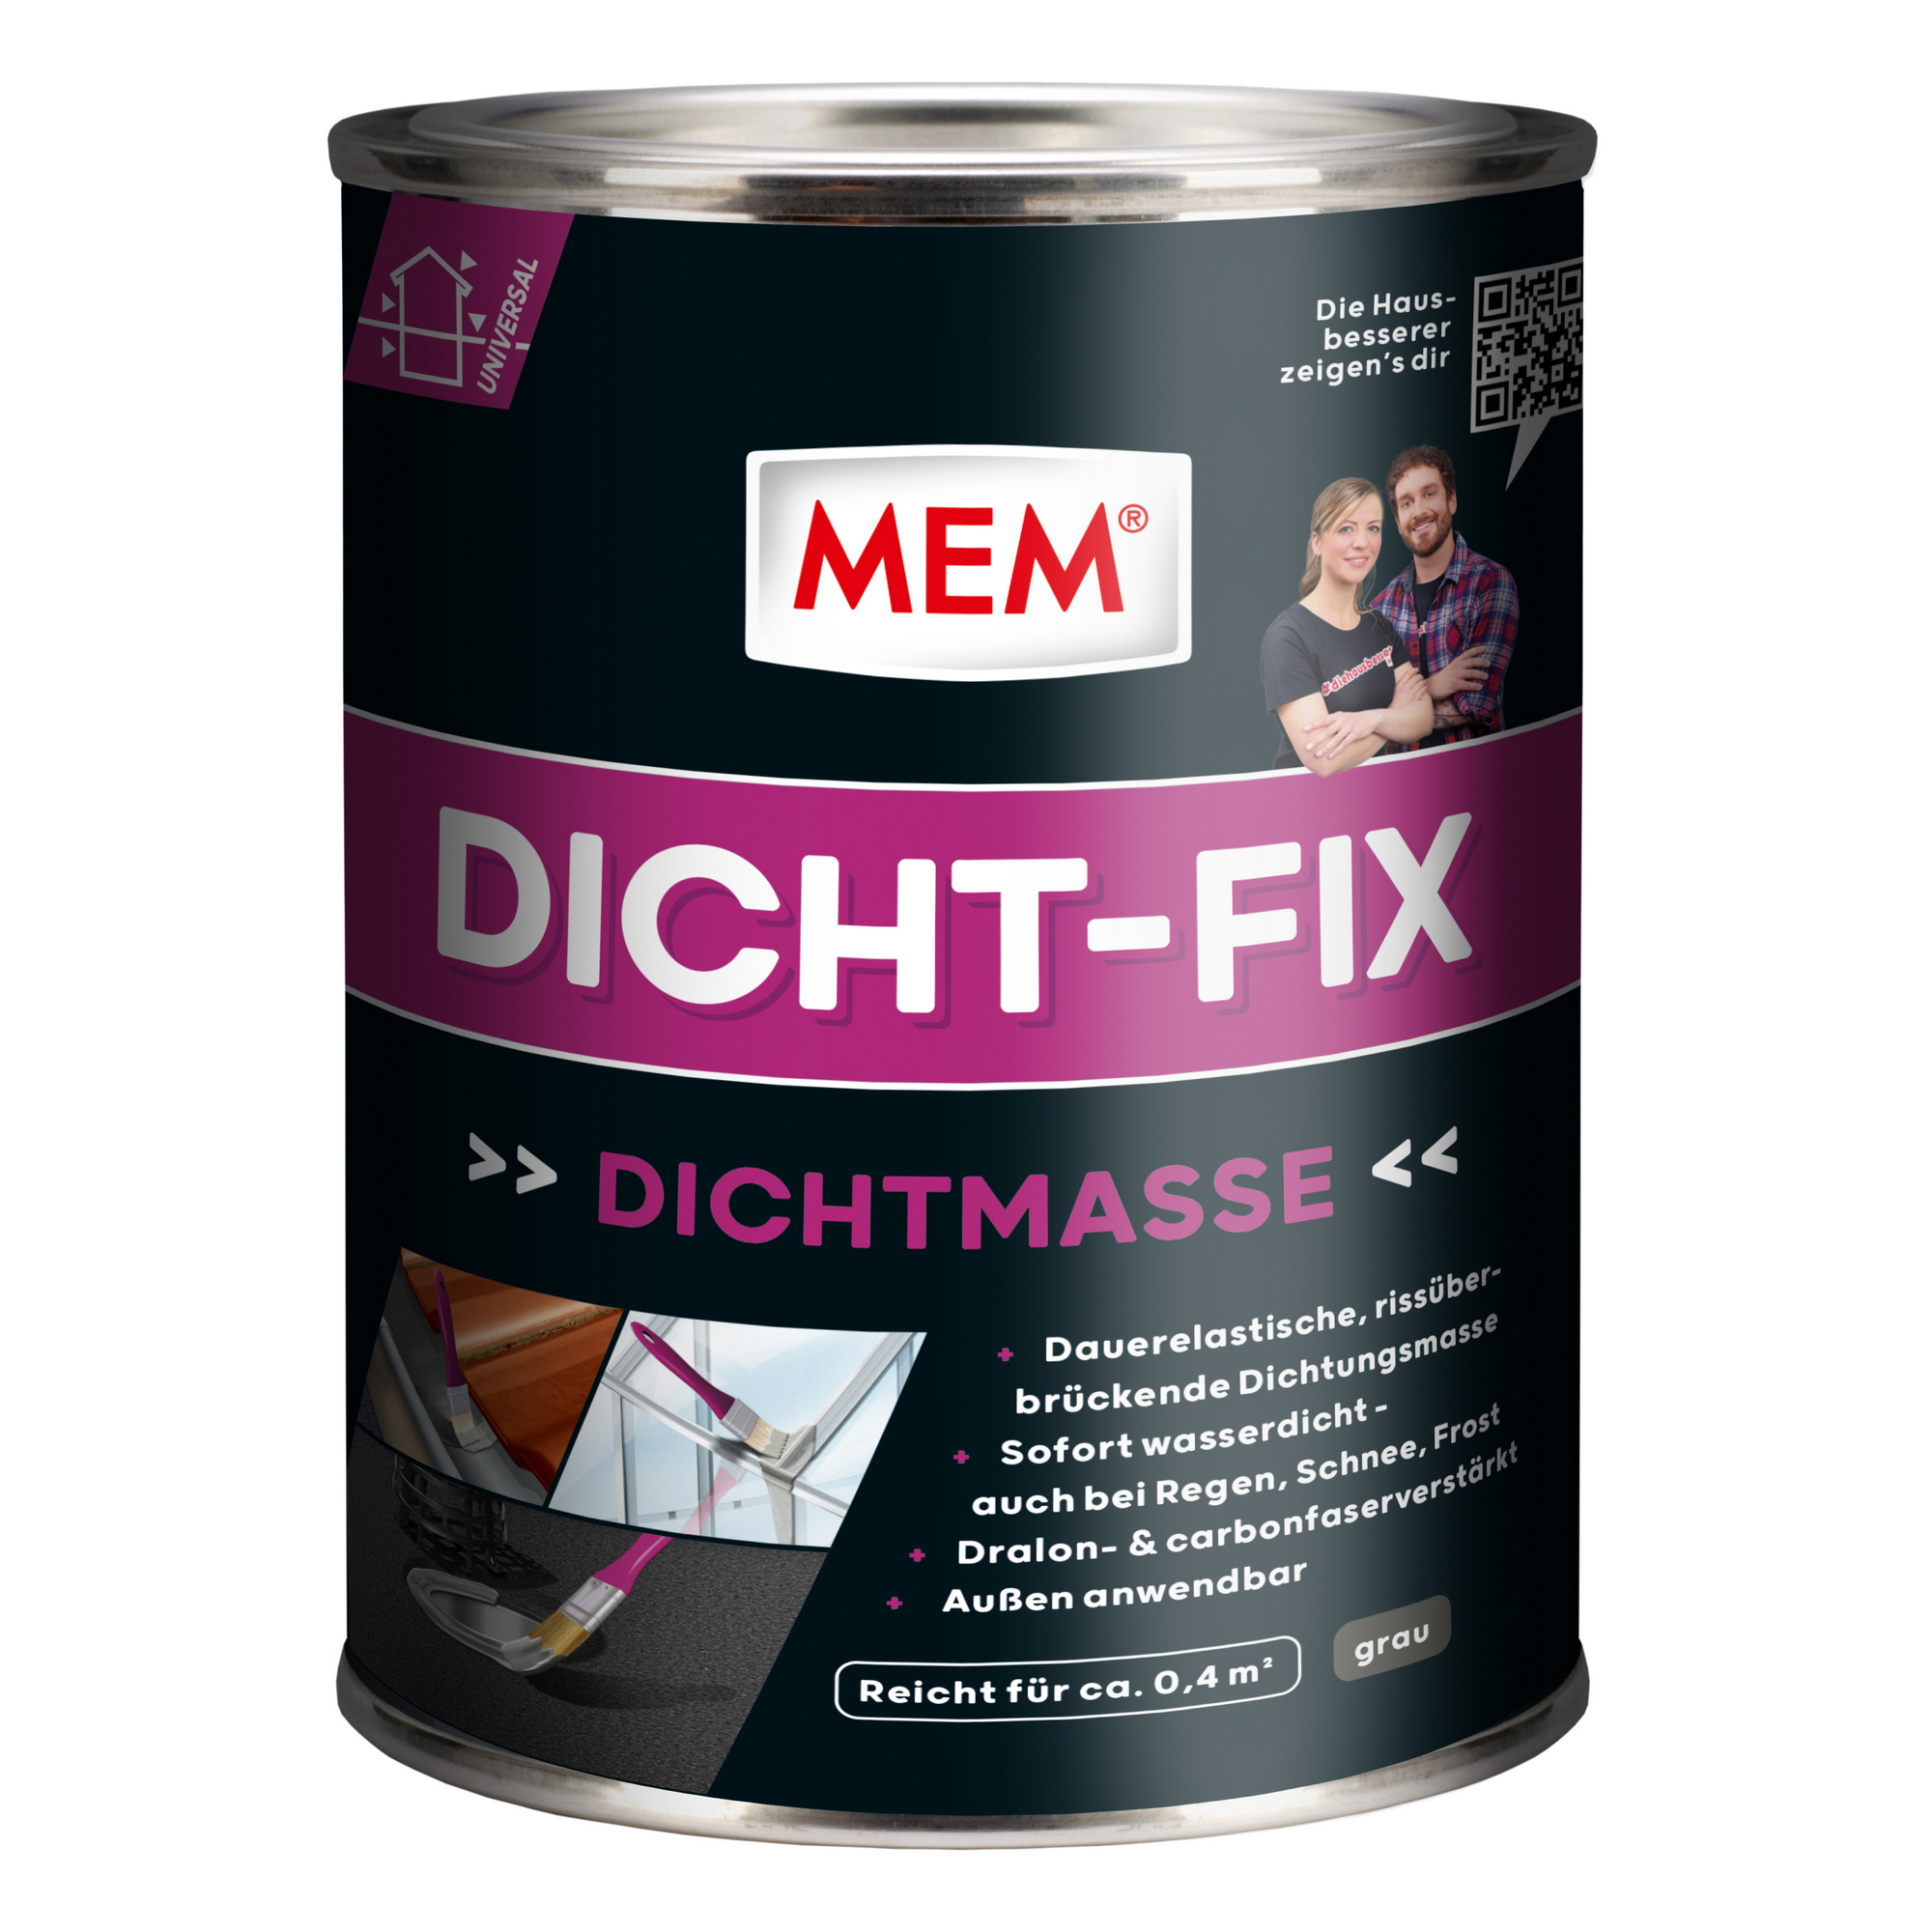 MEM Dicht-Fix 750 ml